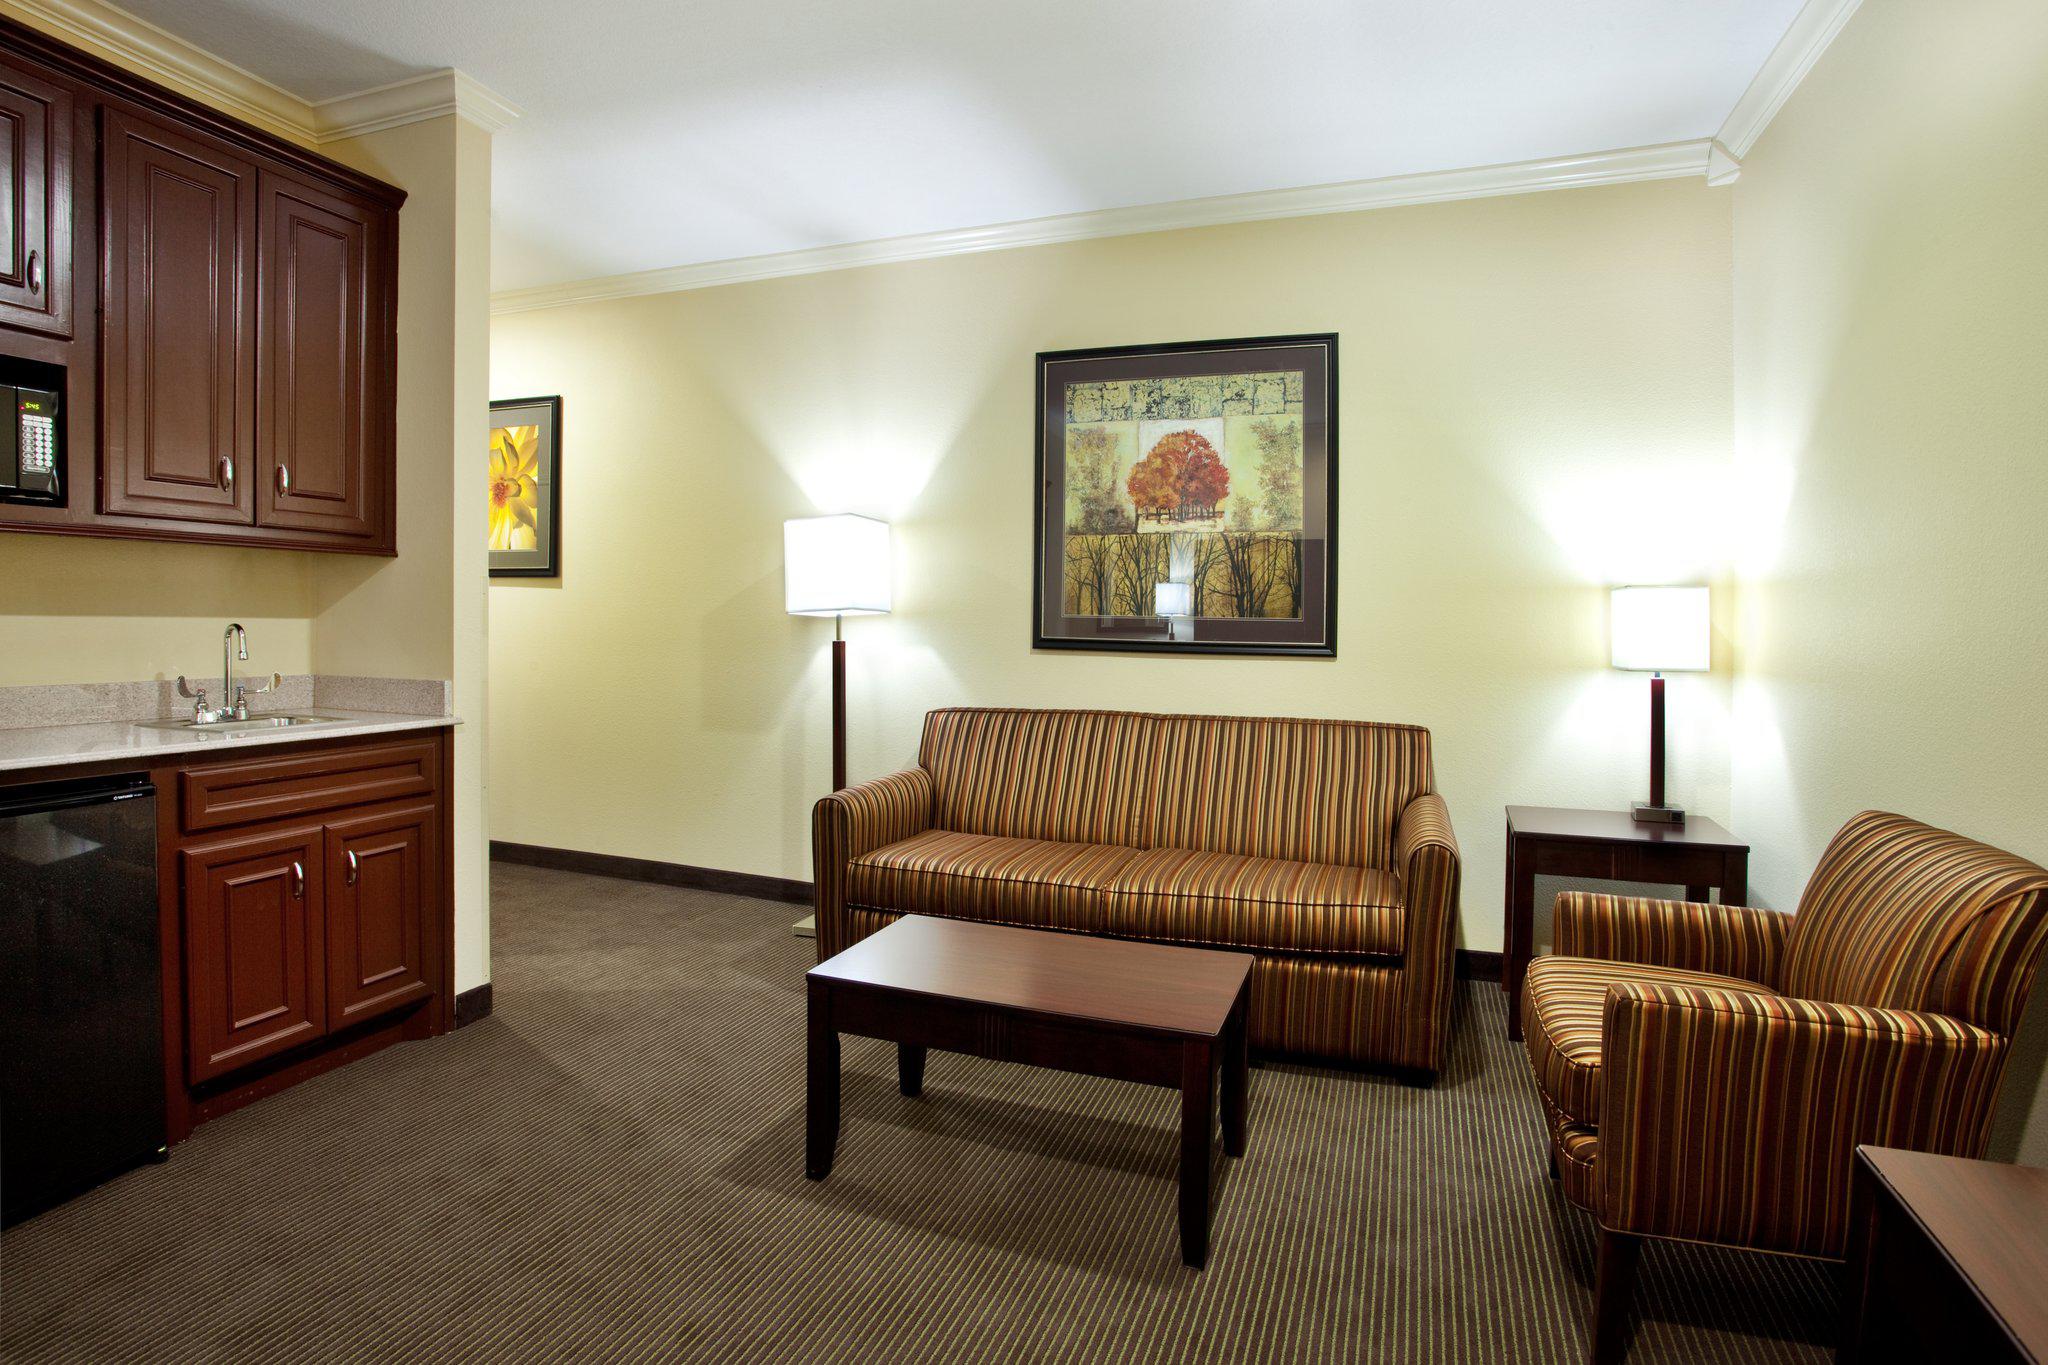 Holiday Inn & Suites Lake Charles South Photo